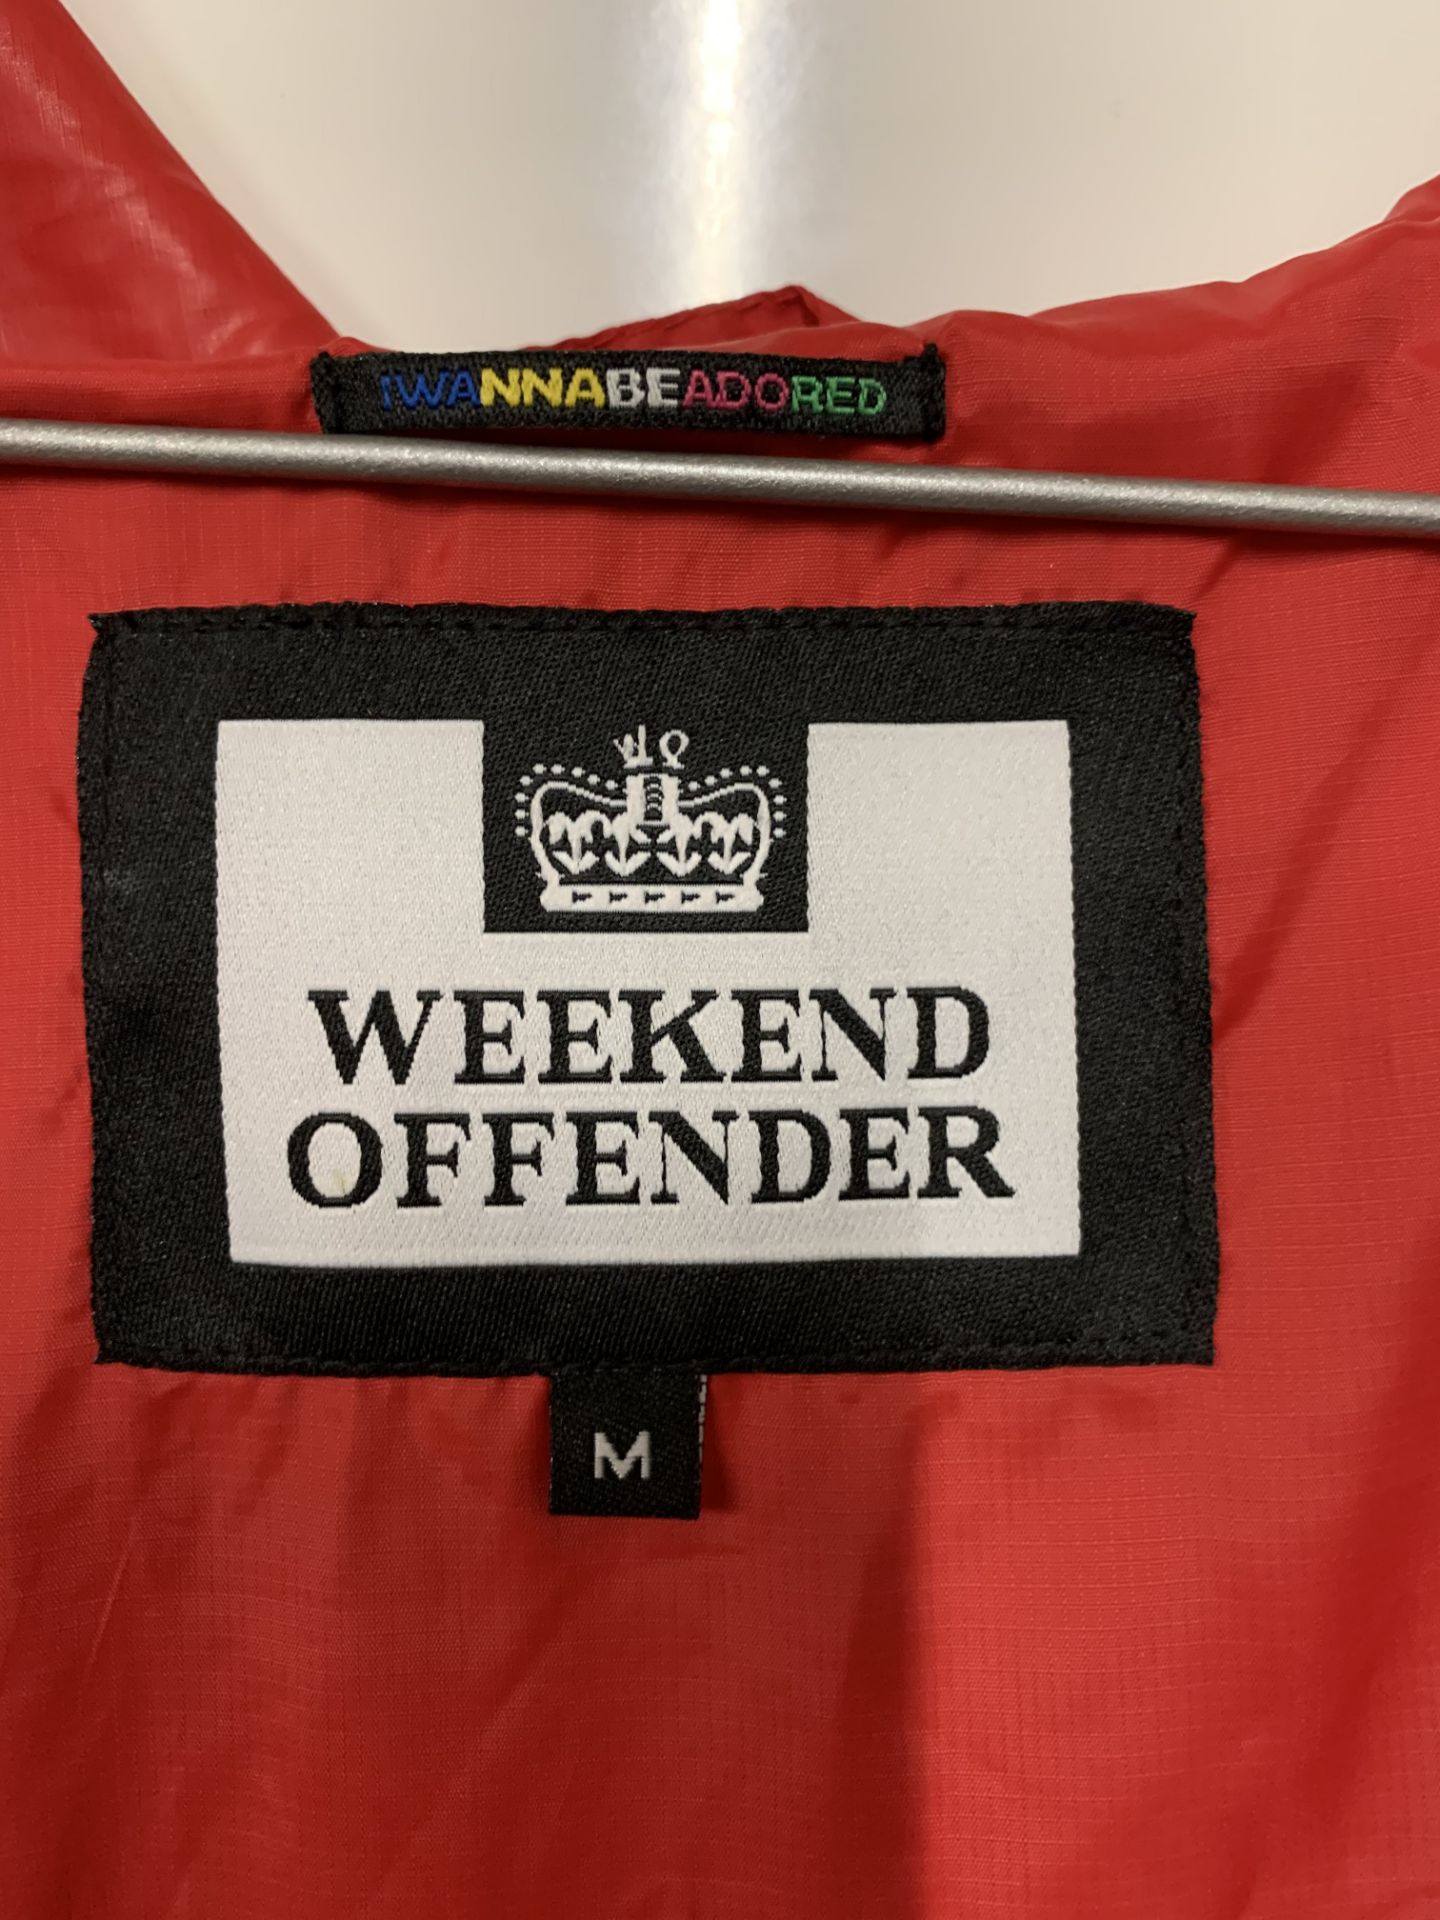 Weekend Offender Jacket - Image 2 of 3